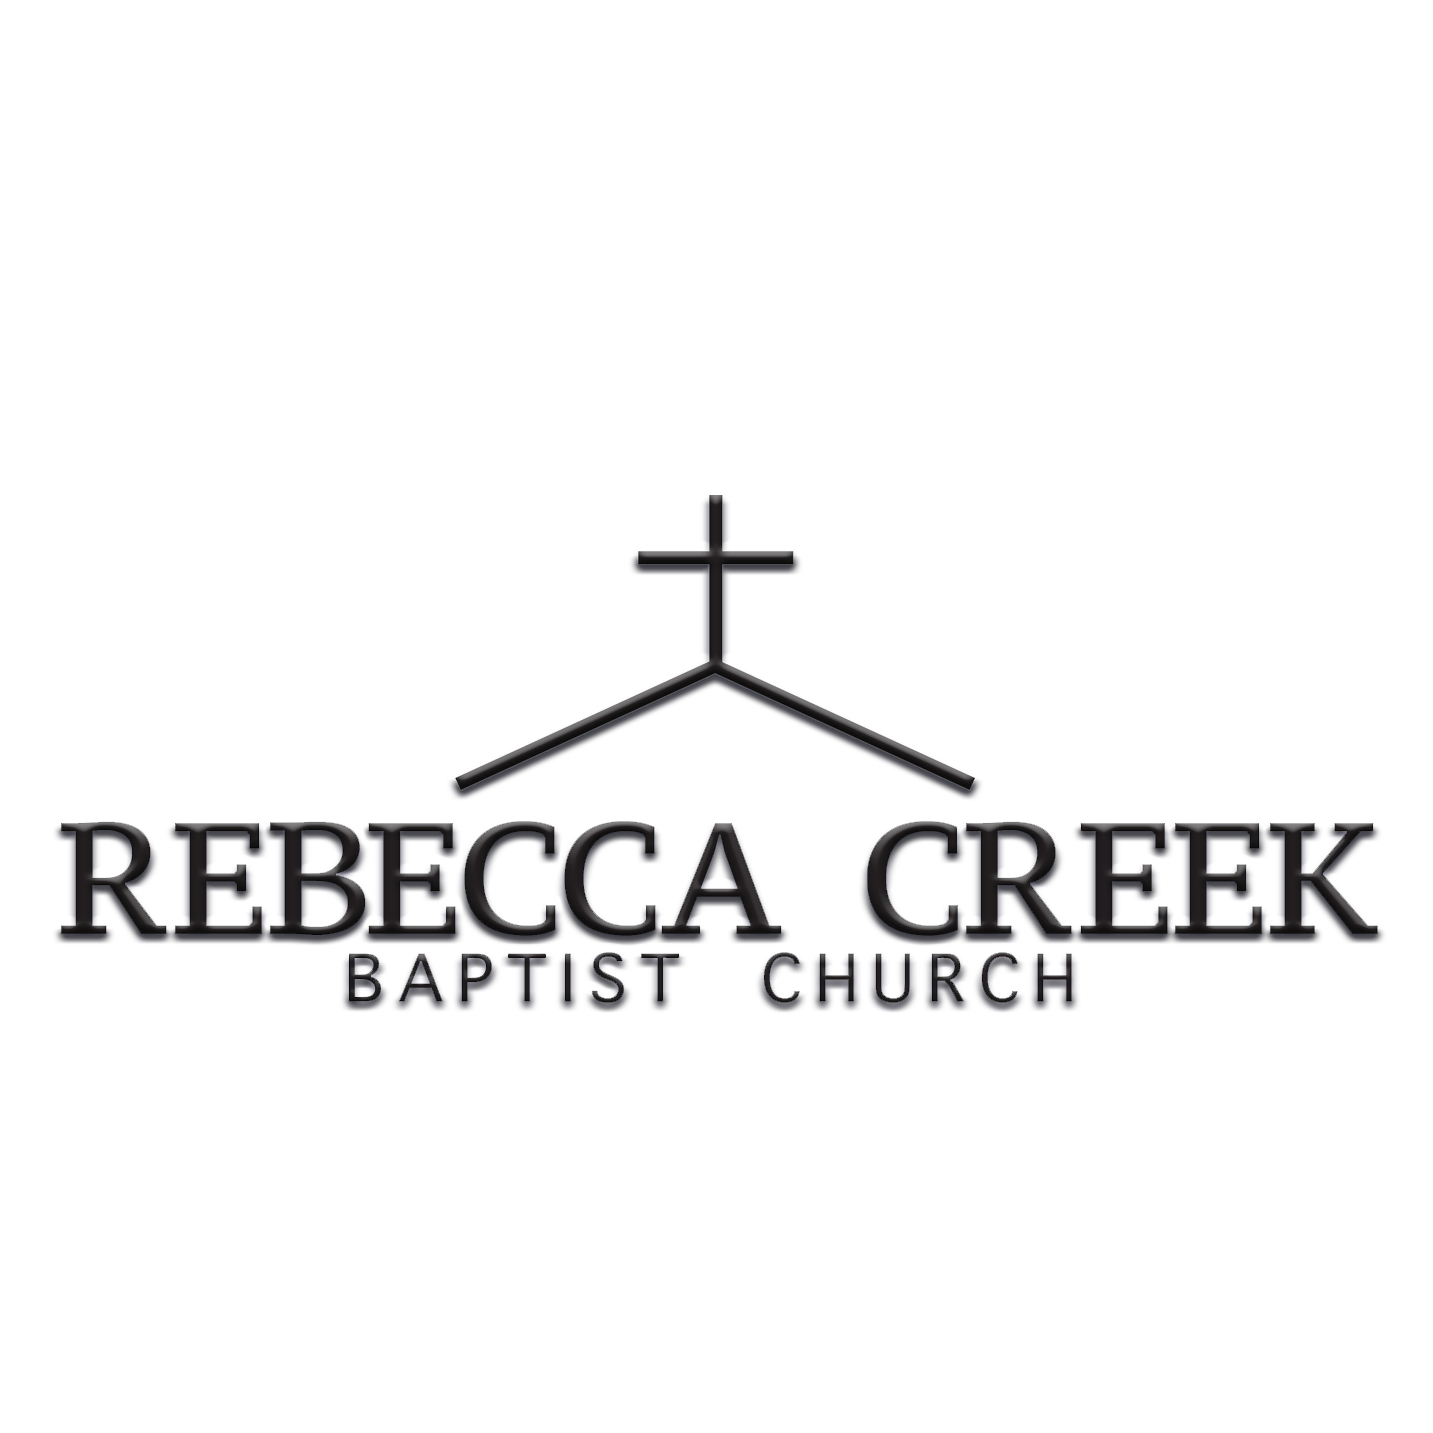 Rebecca Creek Baptist Church